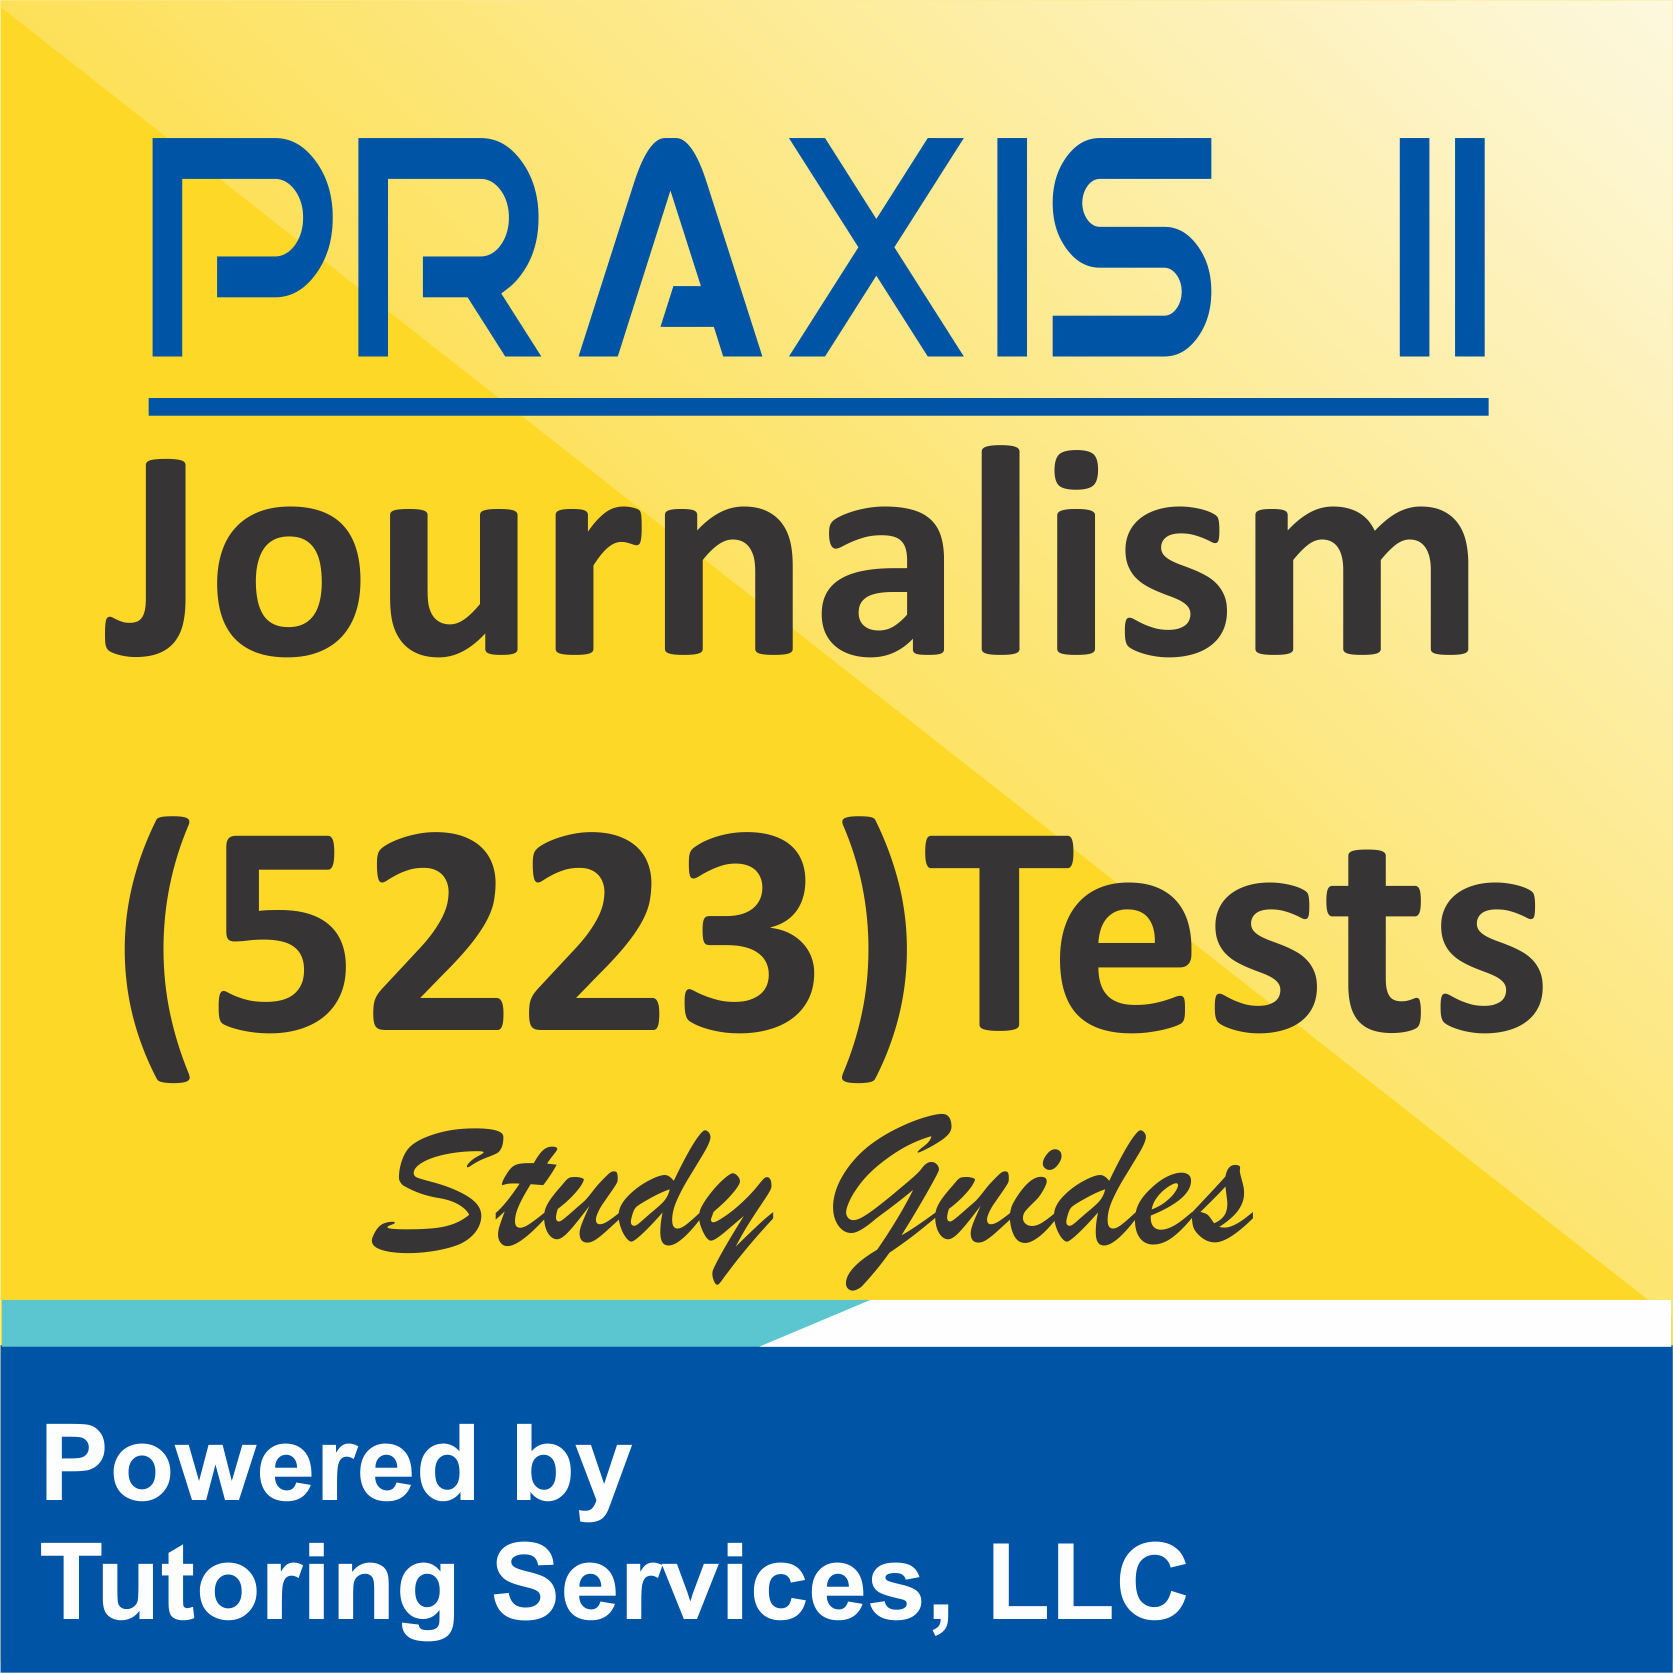 Praxis II Journalism (5223) Examination Information